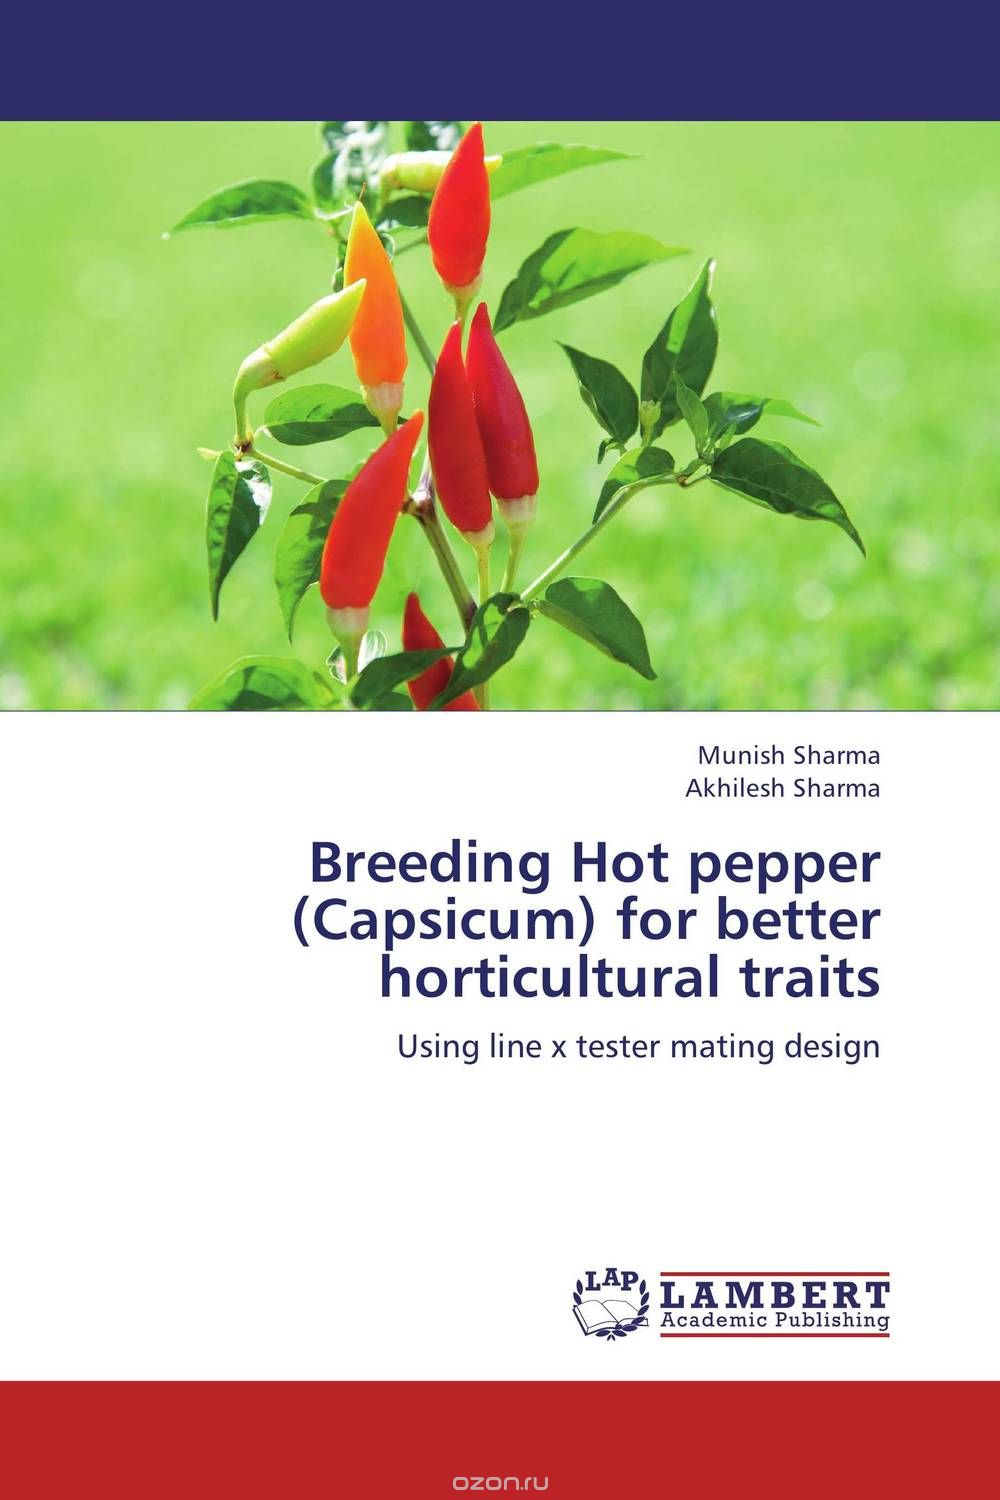 Скачать книгу "Breeding Hot pepper (Capsicum) for better horticultural traits"